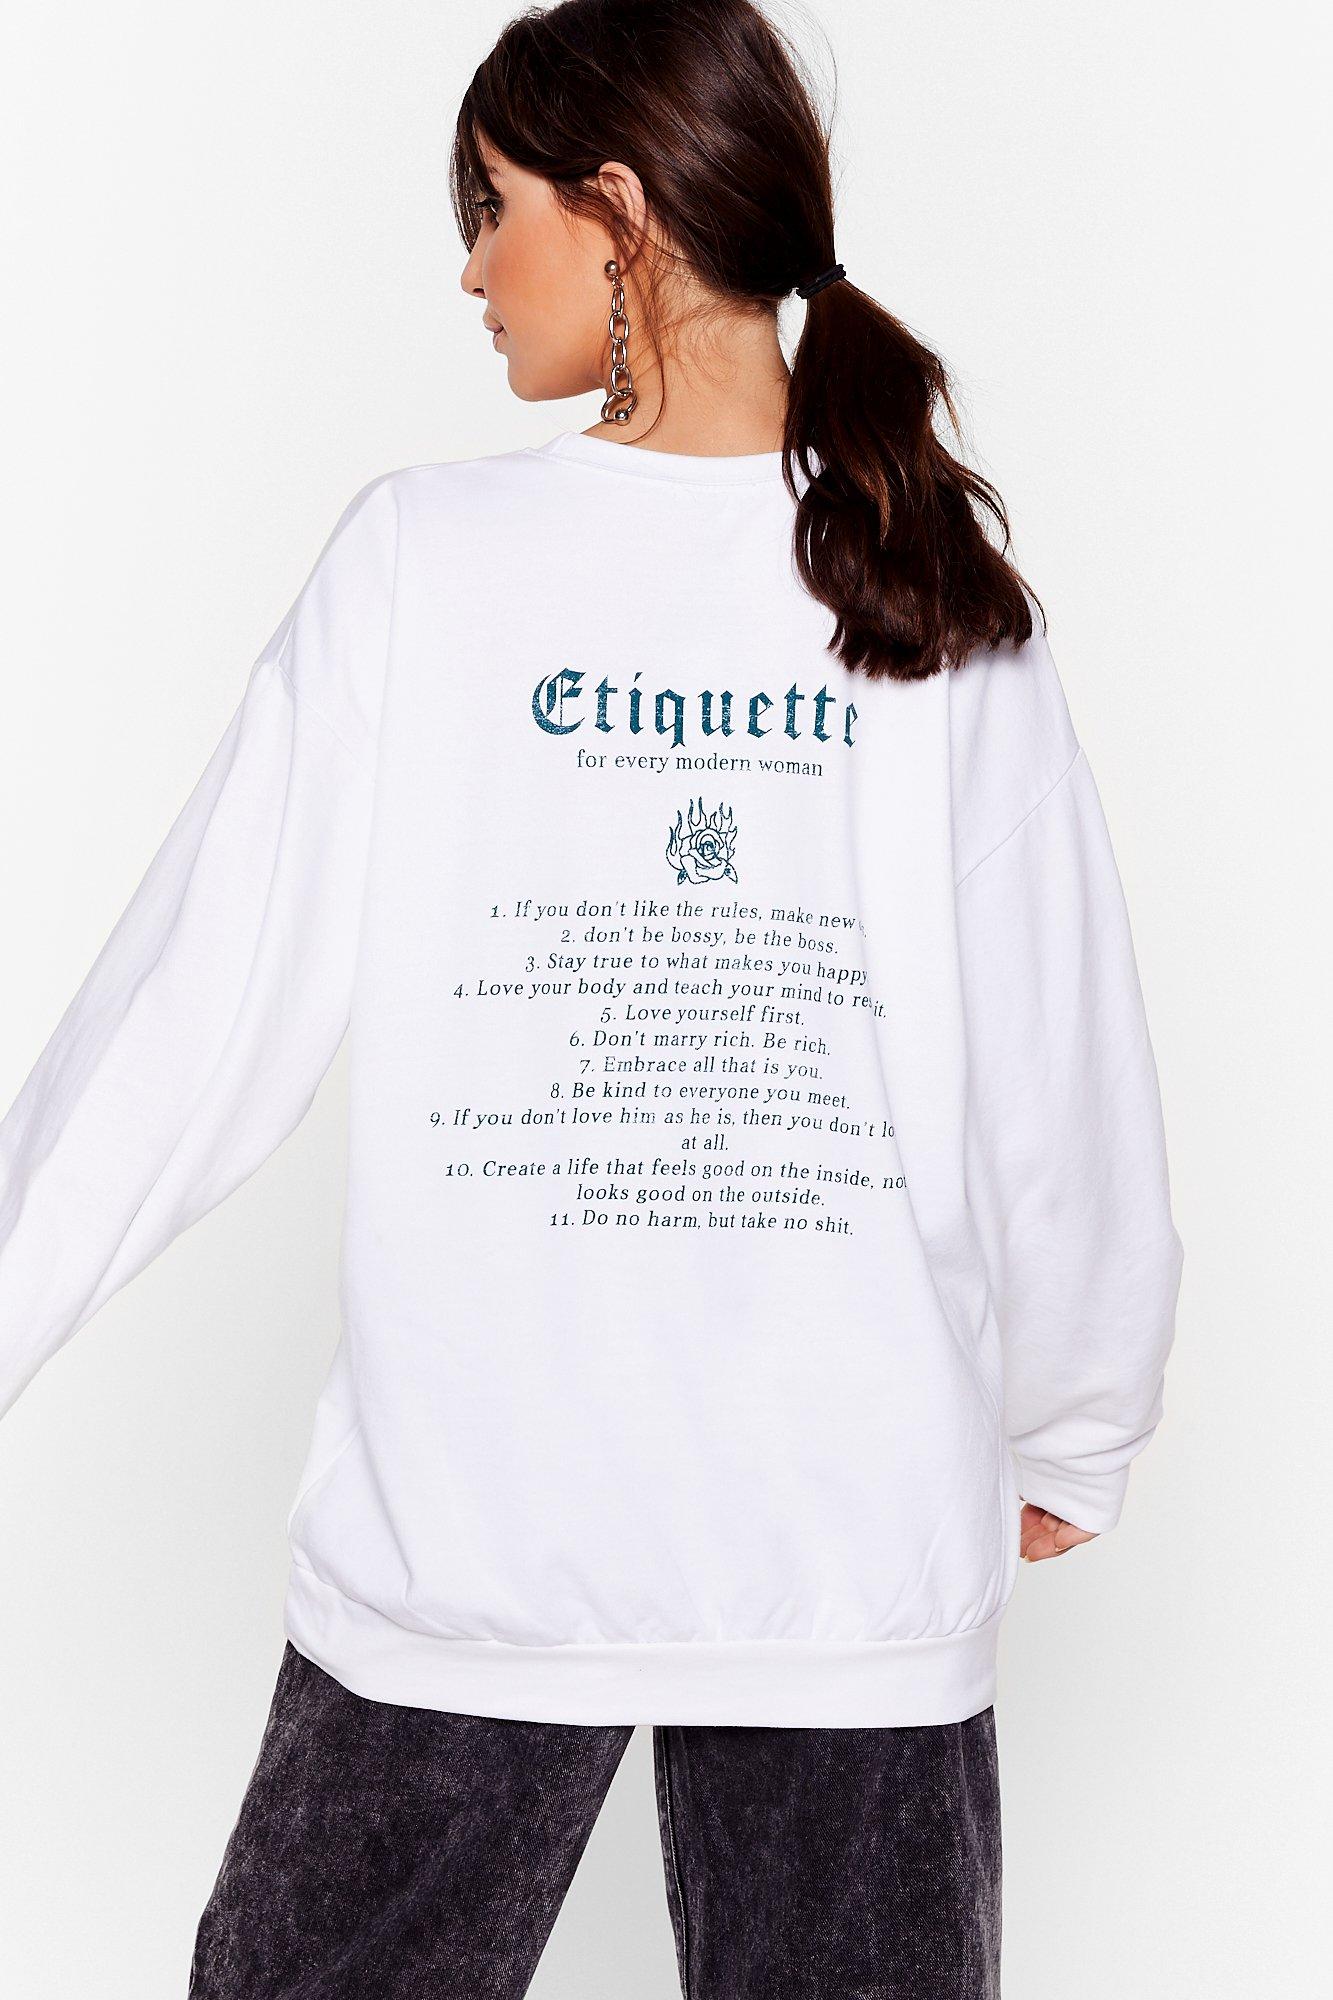 oversized graphic sweatshirt